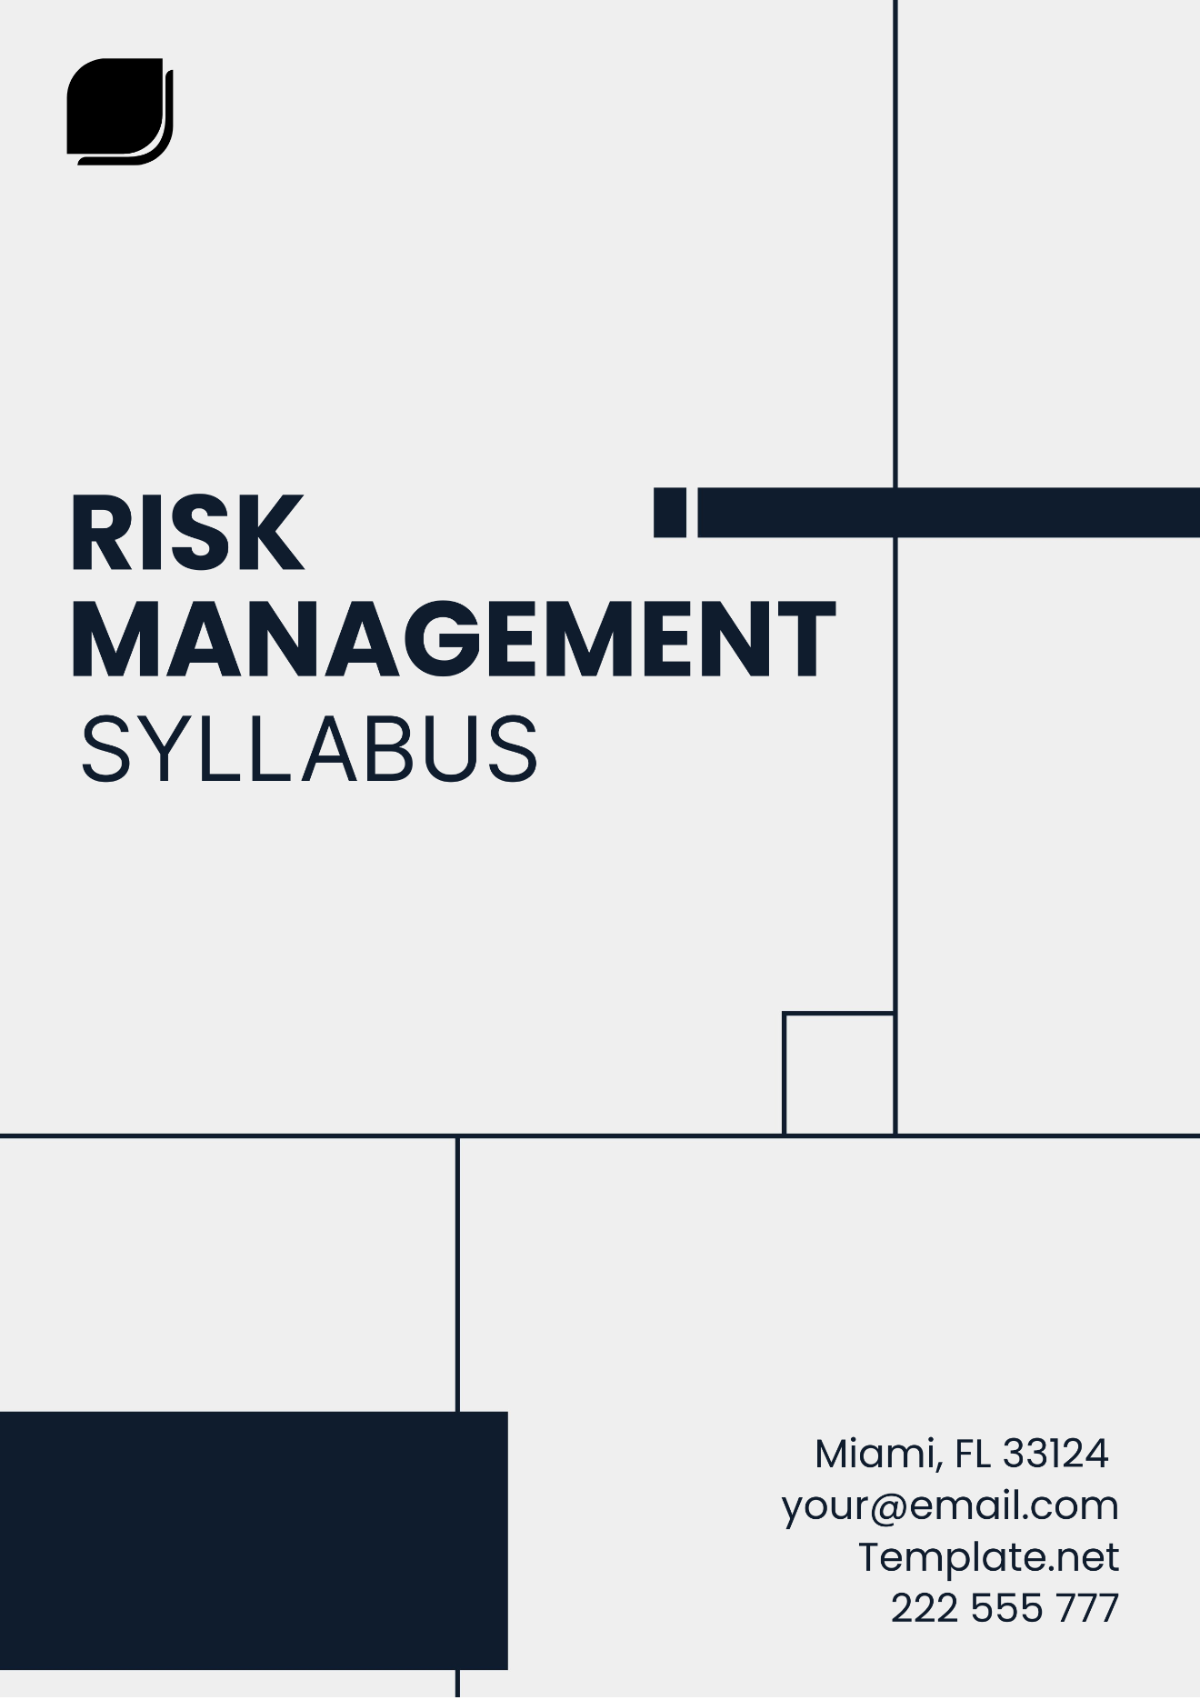 Risk Management Syllabus Template